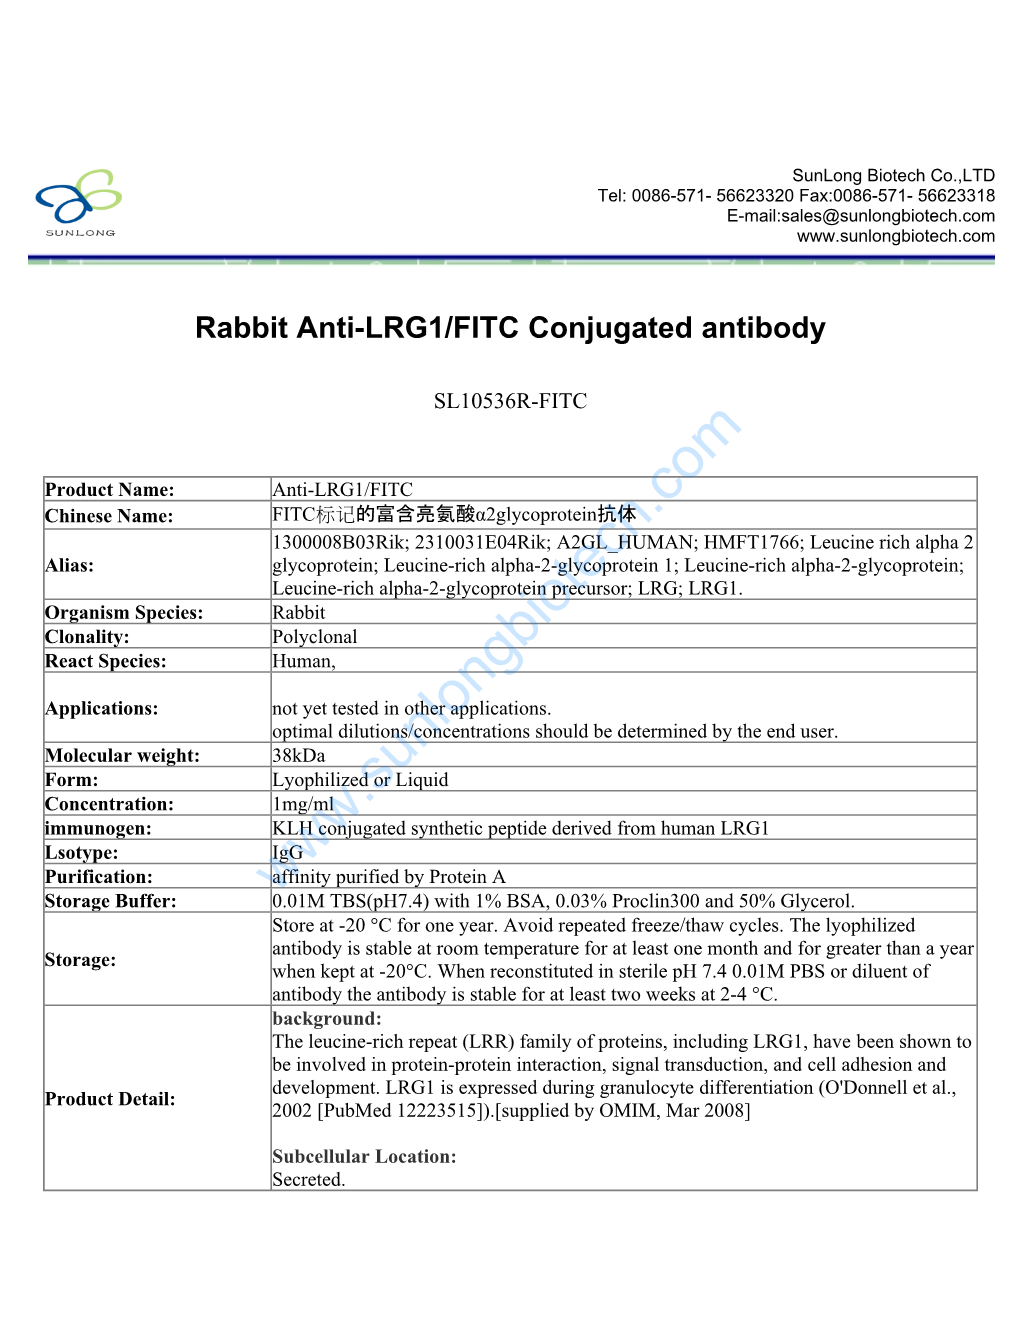 Rabbit Anti-LRG1/FITC Conjugated Antibody